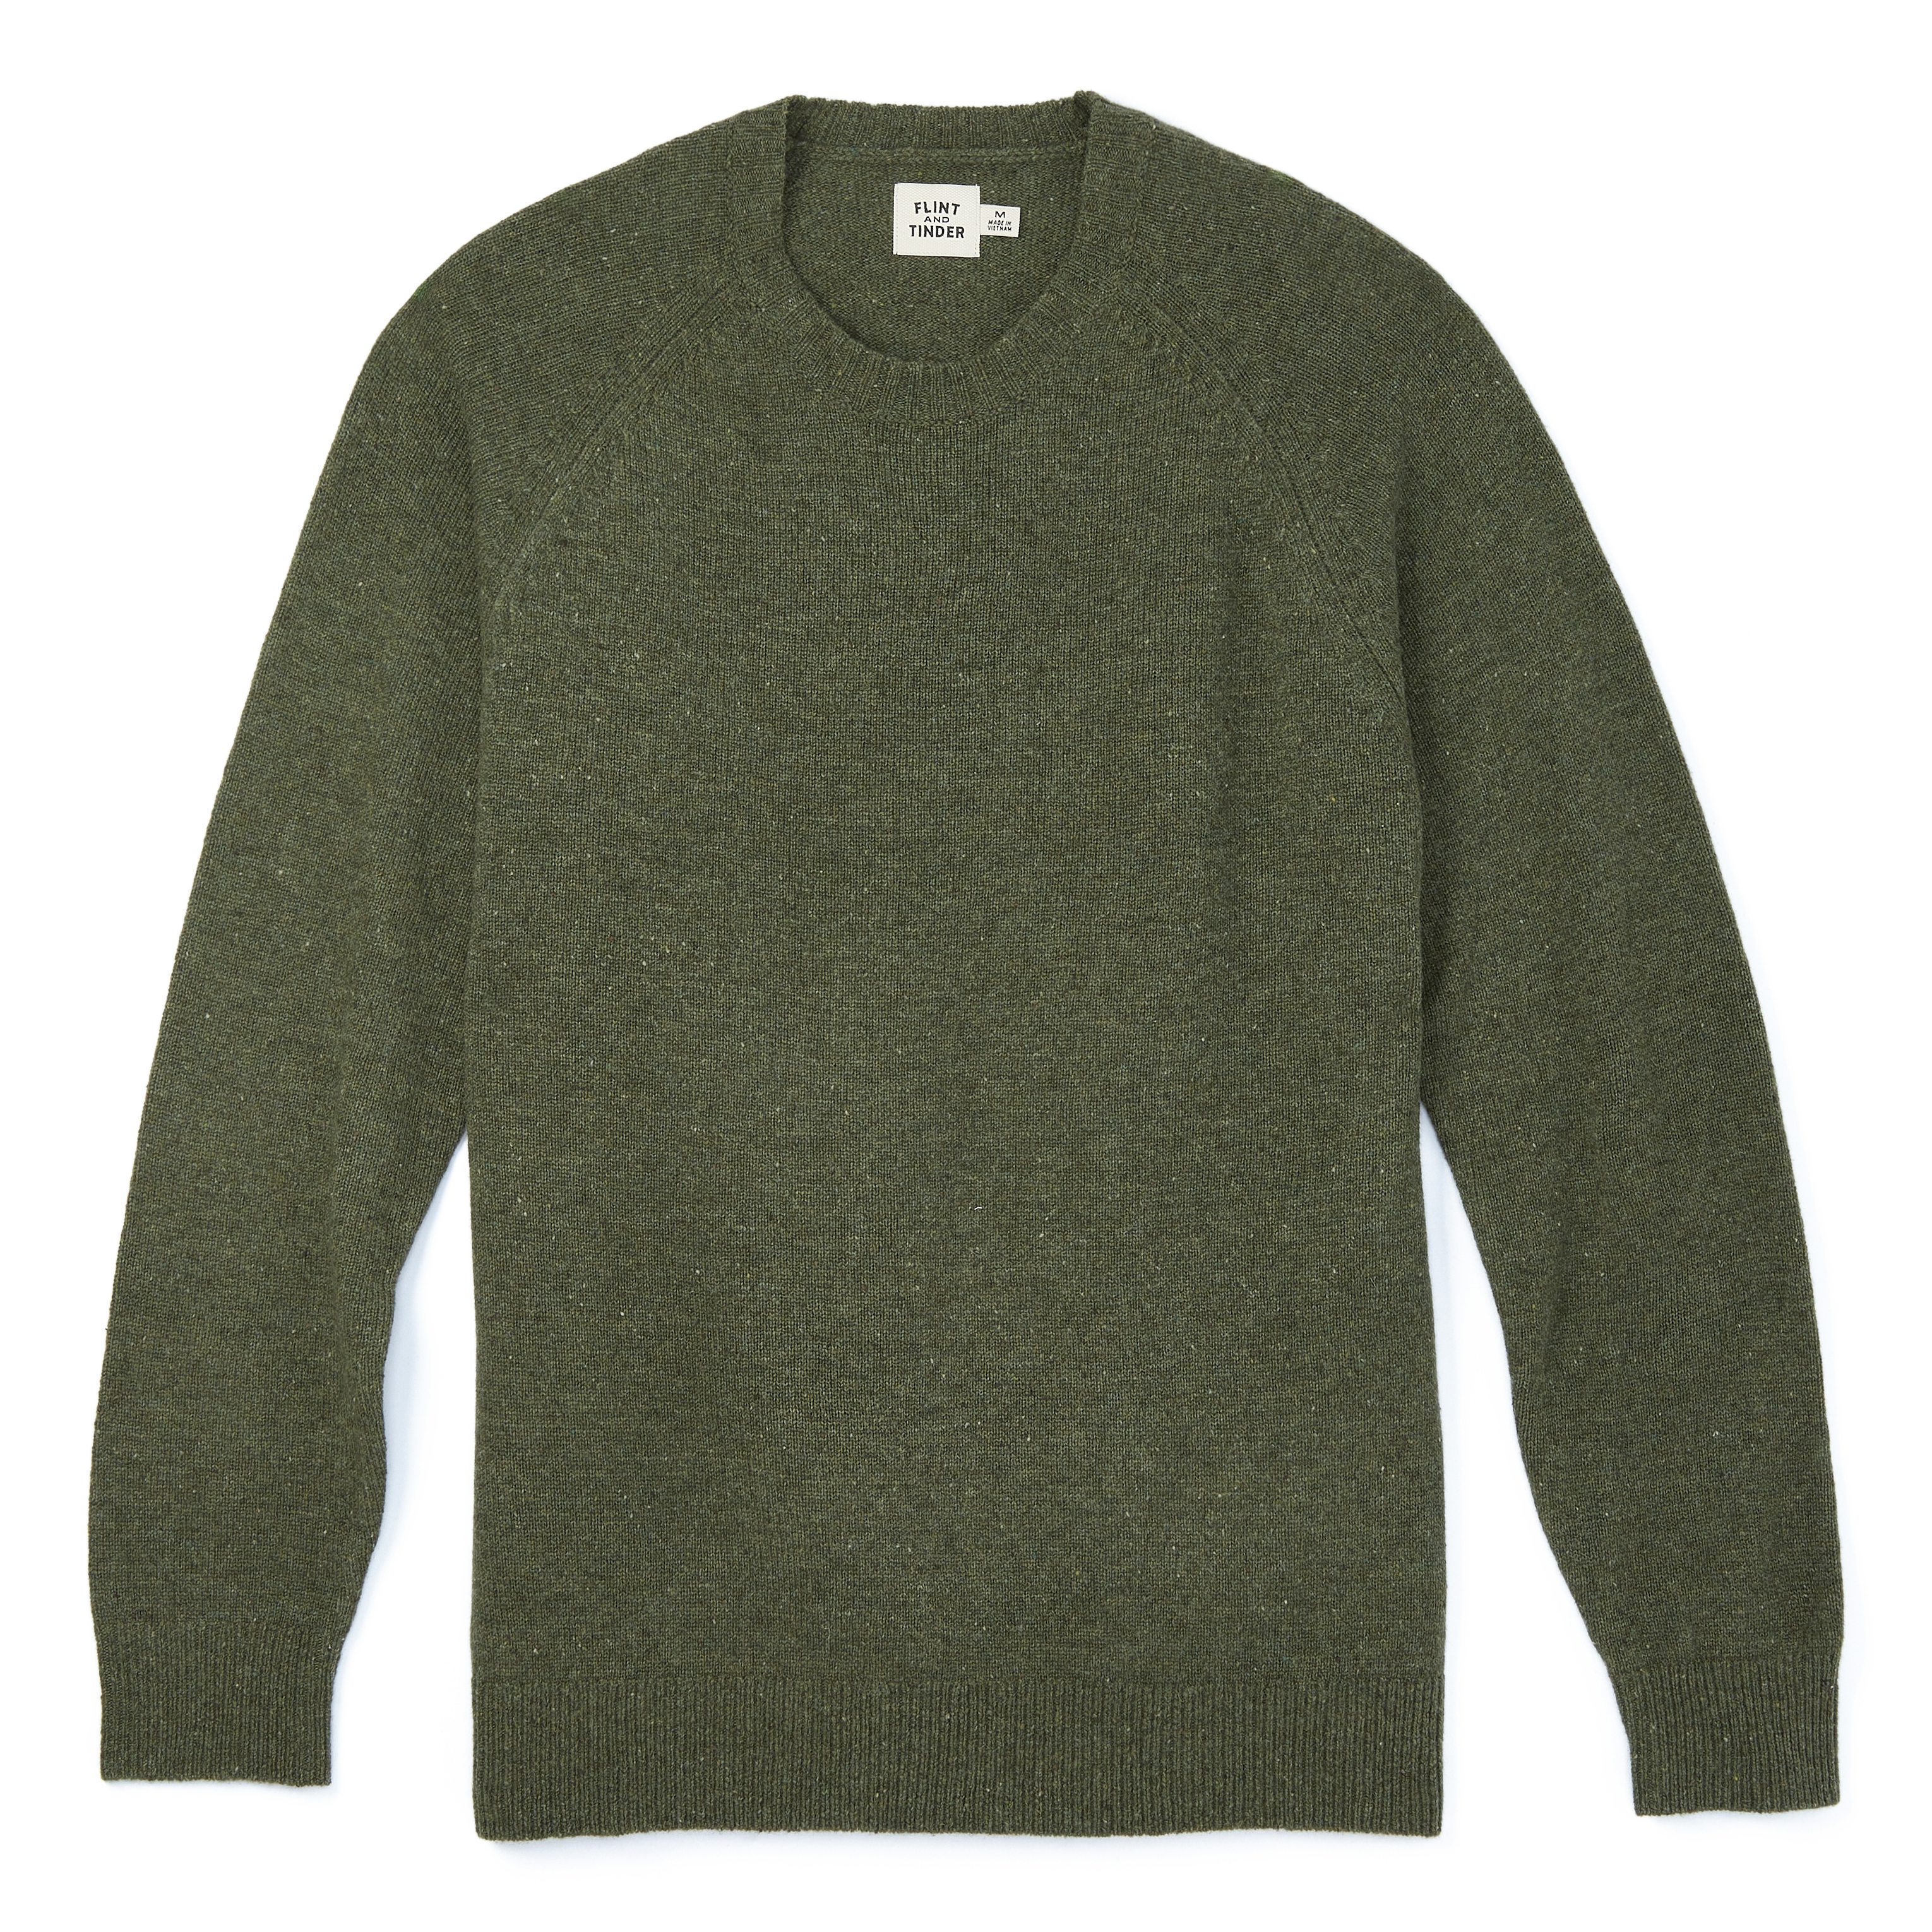 Flint and Tinder Speckled Merino Wool Crewneck Sweater - Olive